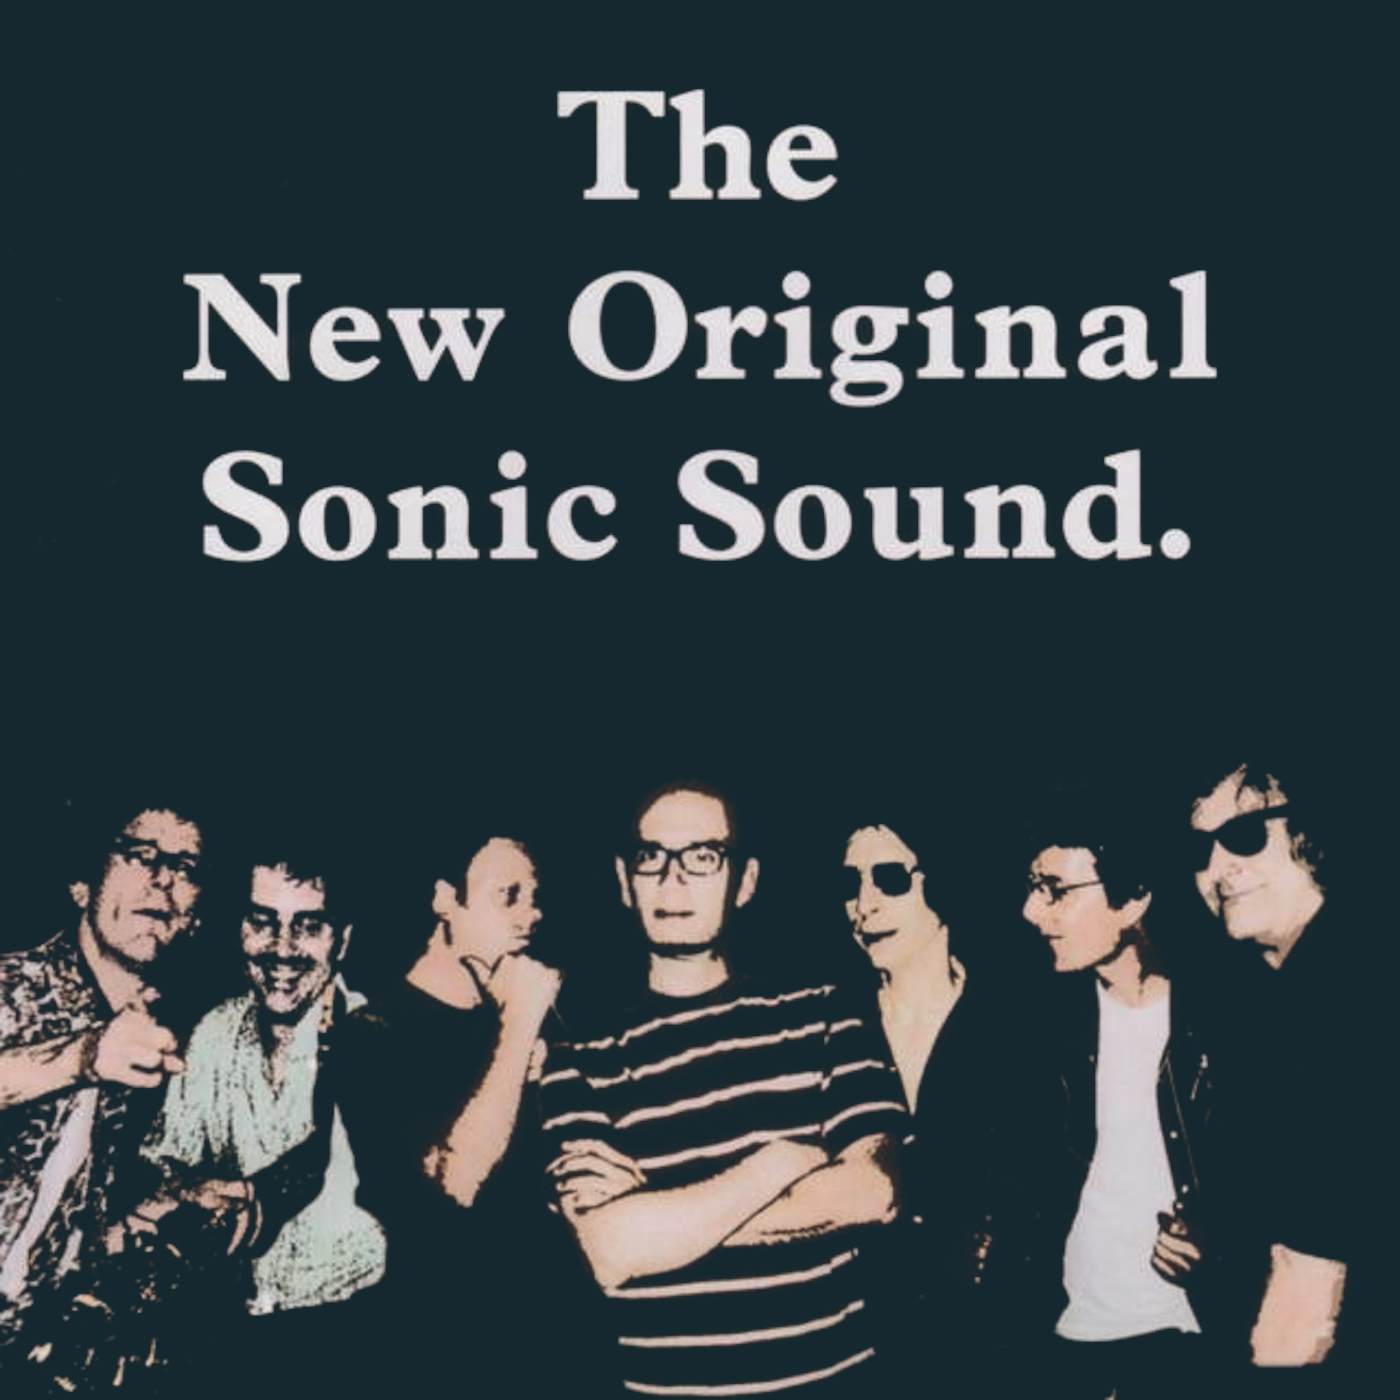 The New Original Sonic Sound